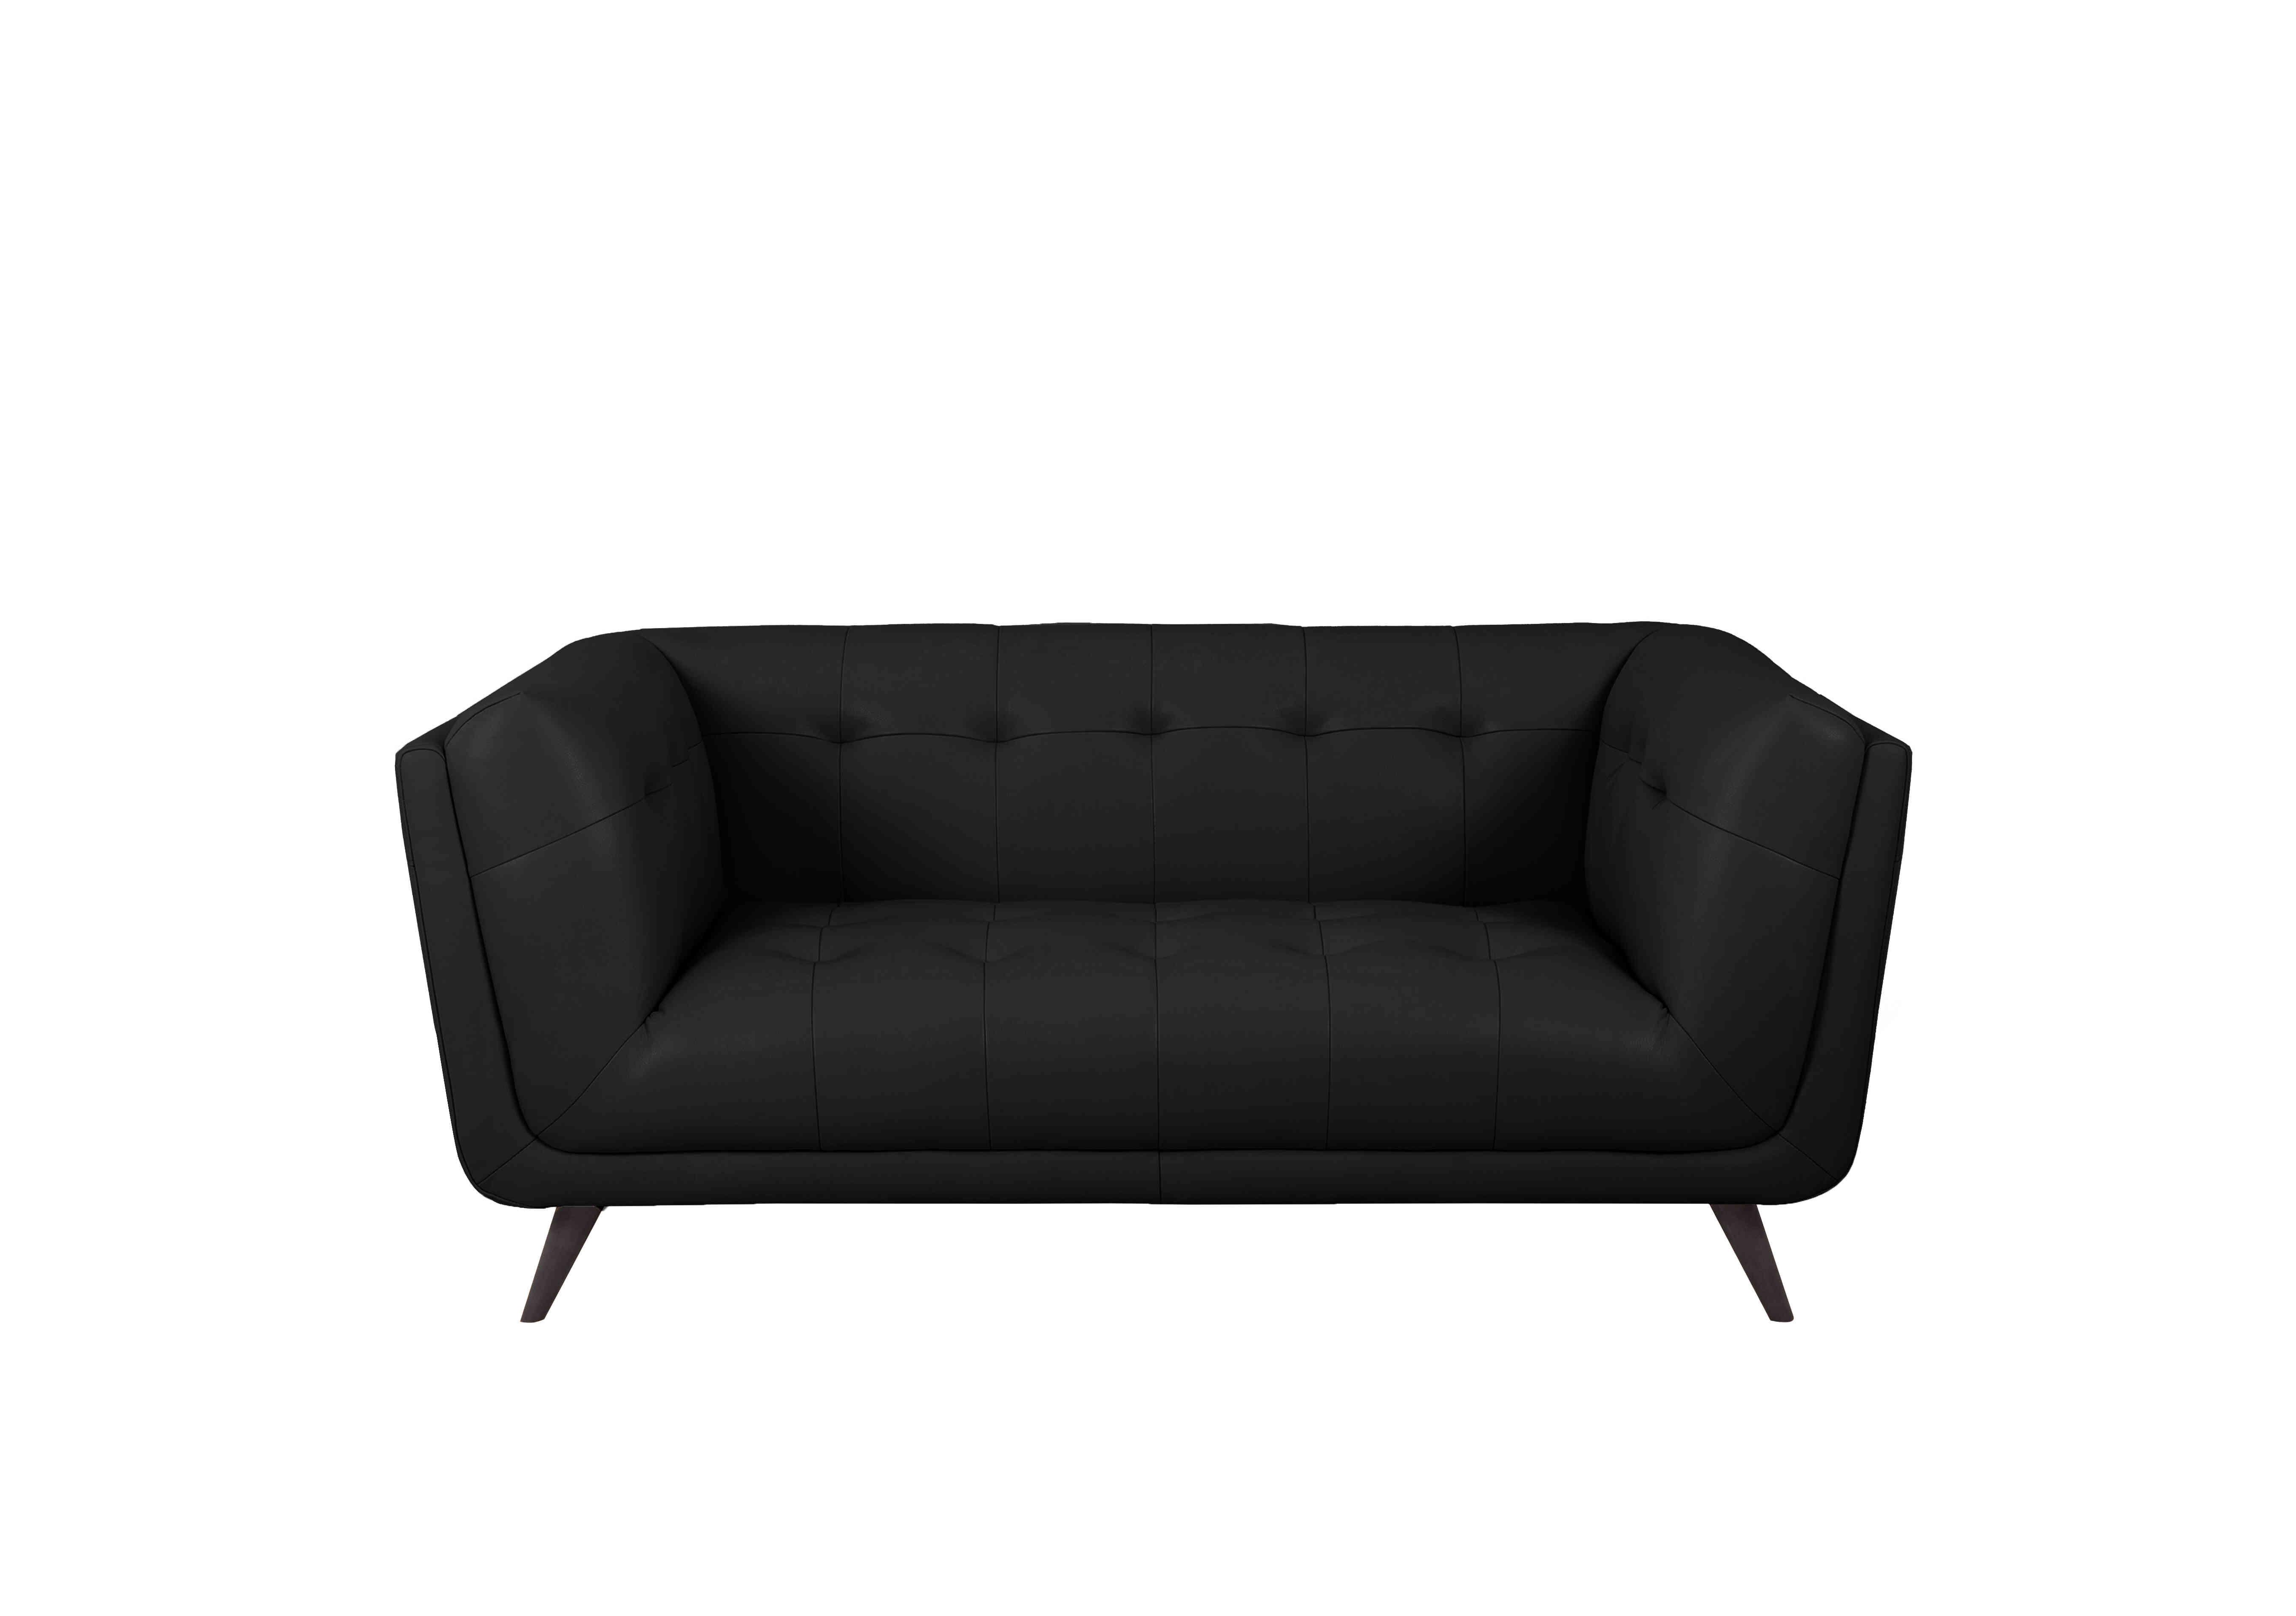 Rene 2 Seater Leather Sofa in Florida Black on Furniture Village